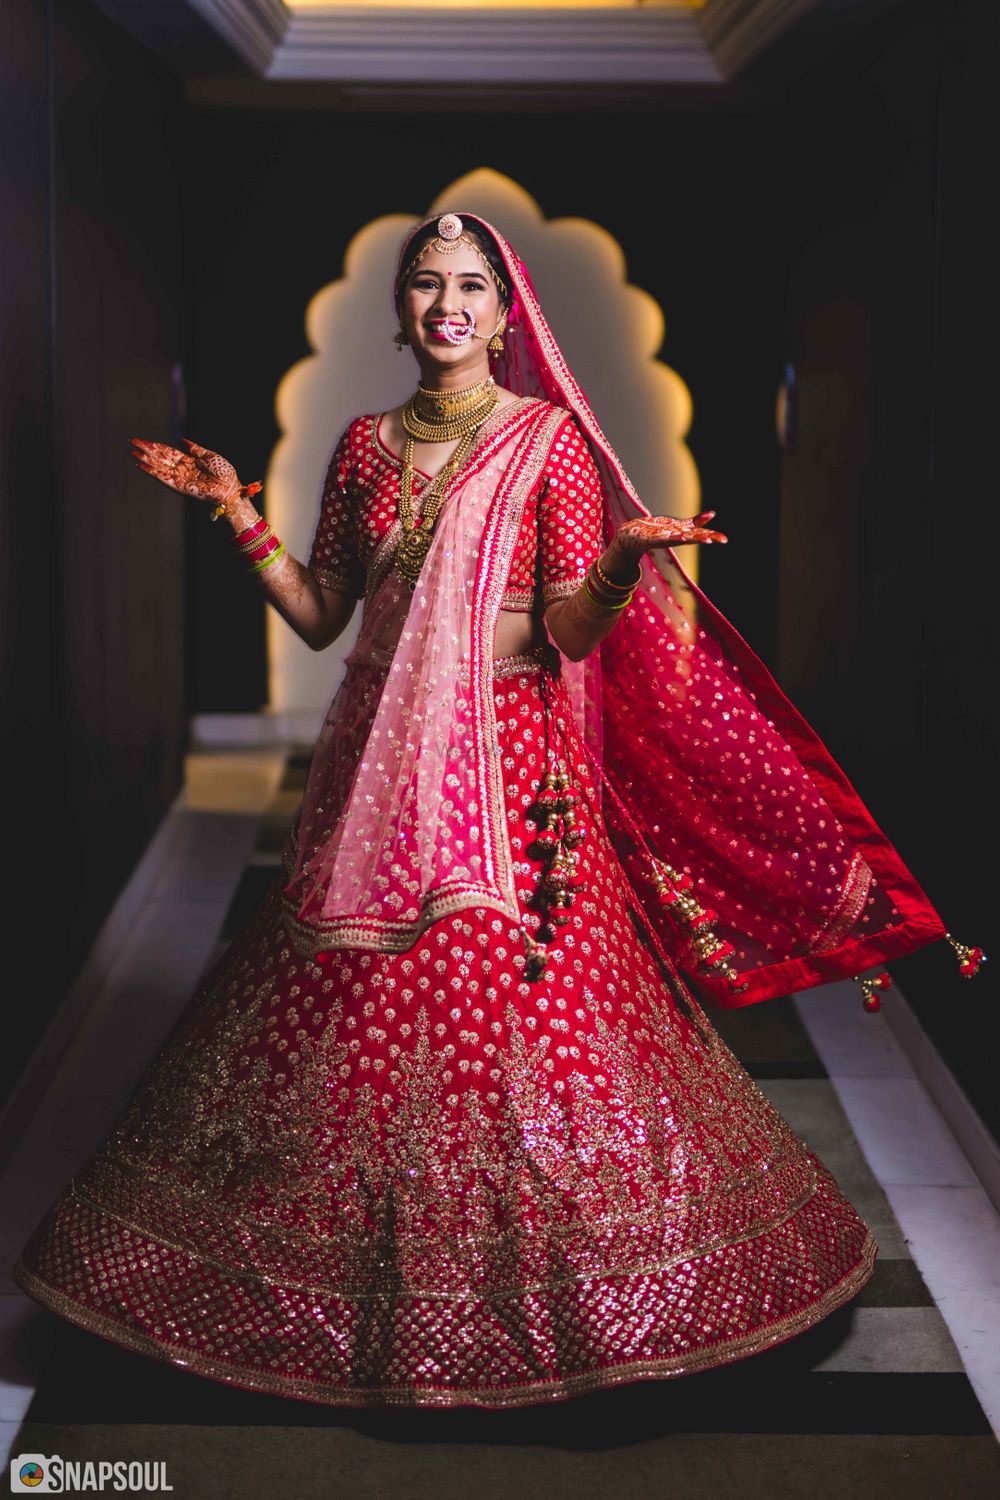 Photo of Red and pink bridal lehenga happy bride